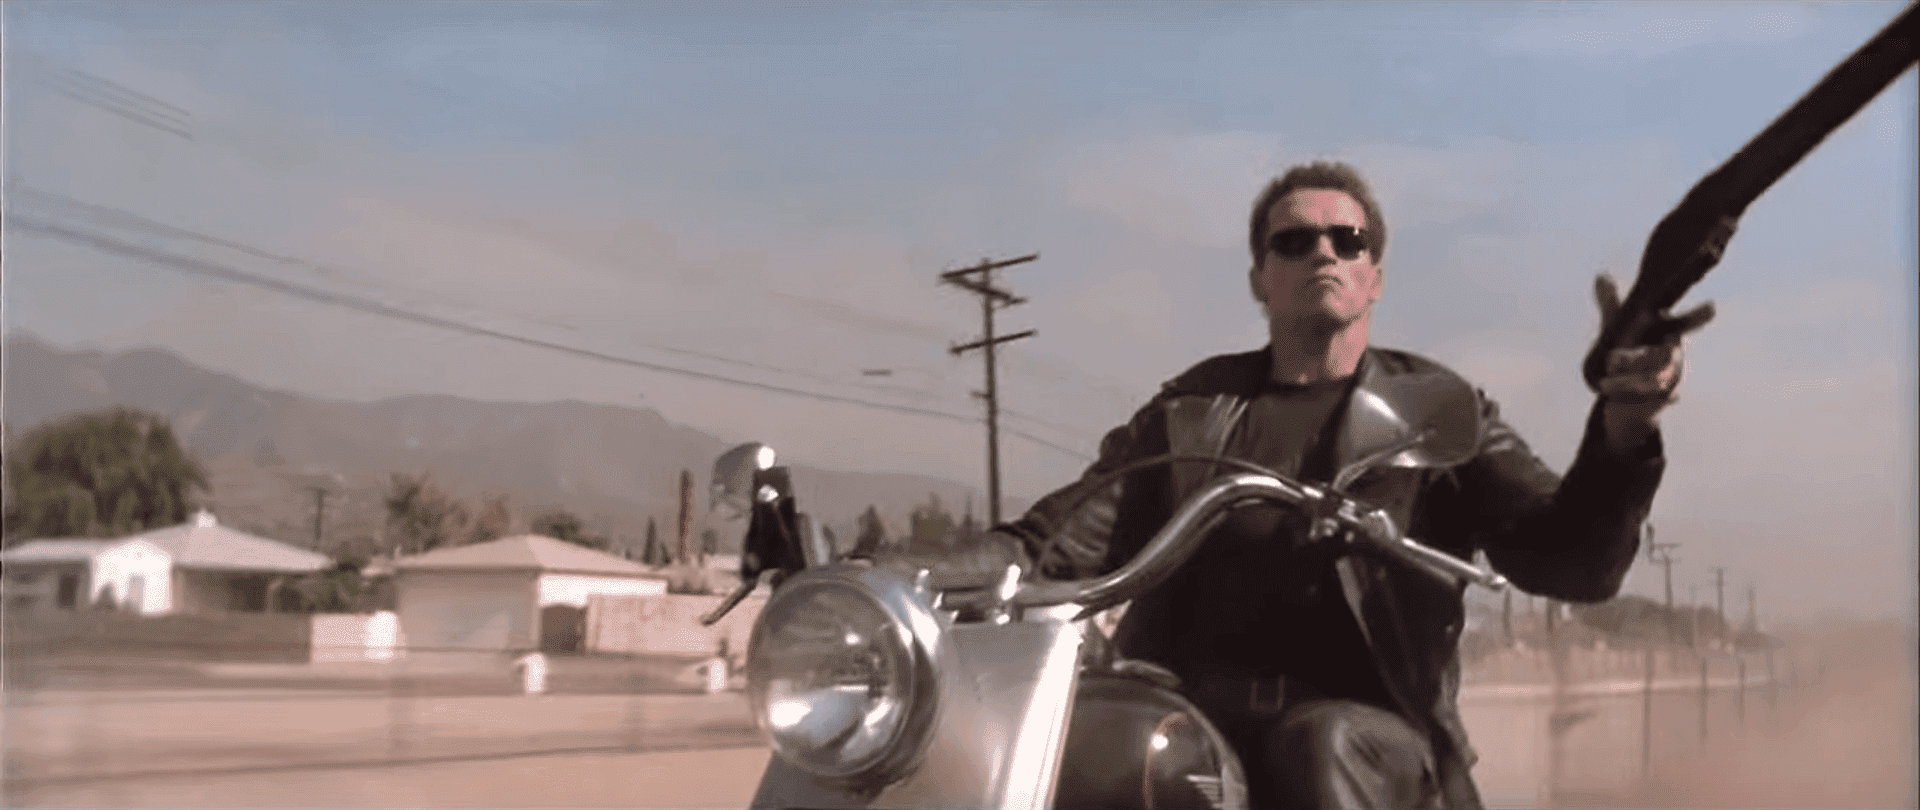 Arnold Schwarzenegger in "Terminator 2 - Judgement Day." | Photo: YouTube/STUDIOCANAL France